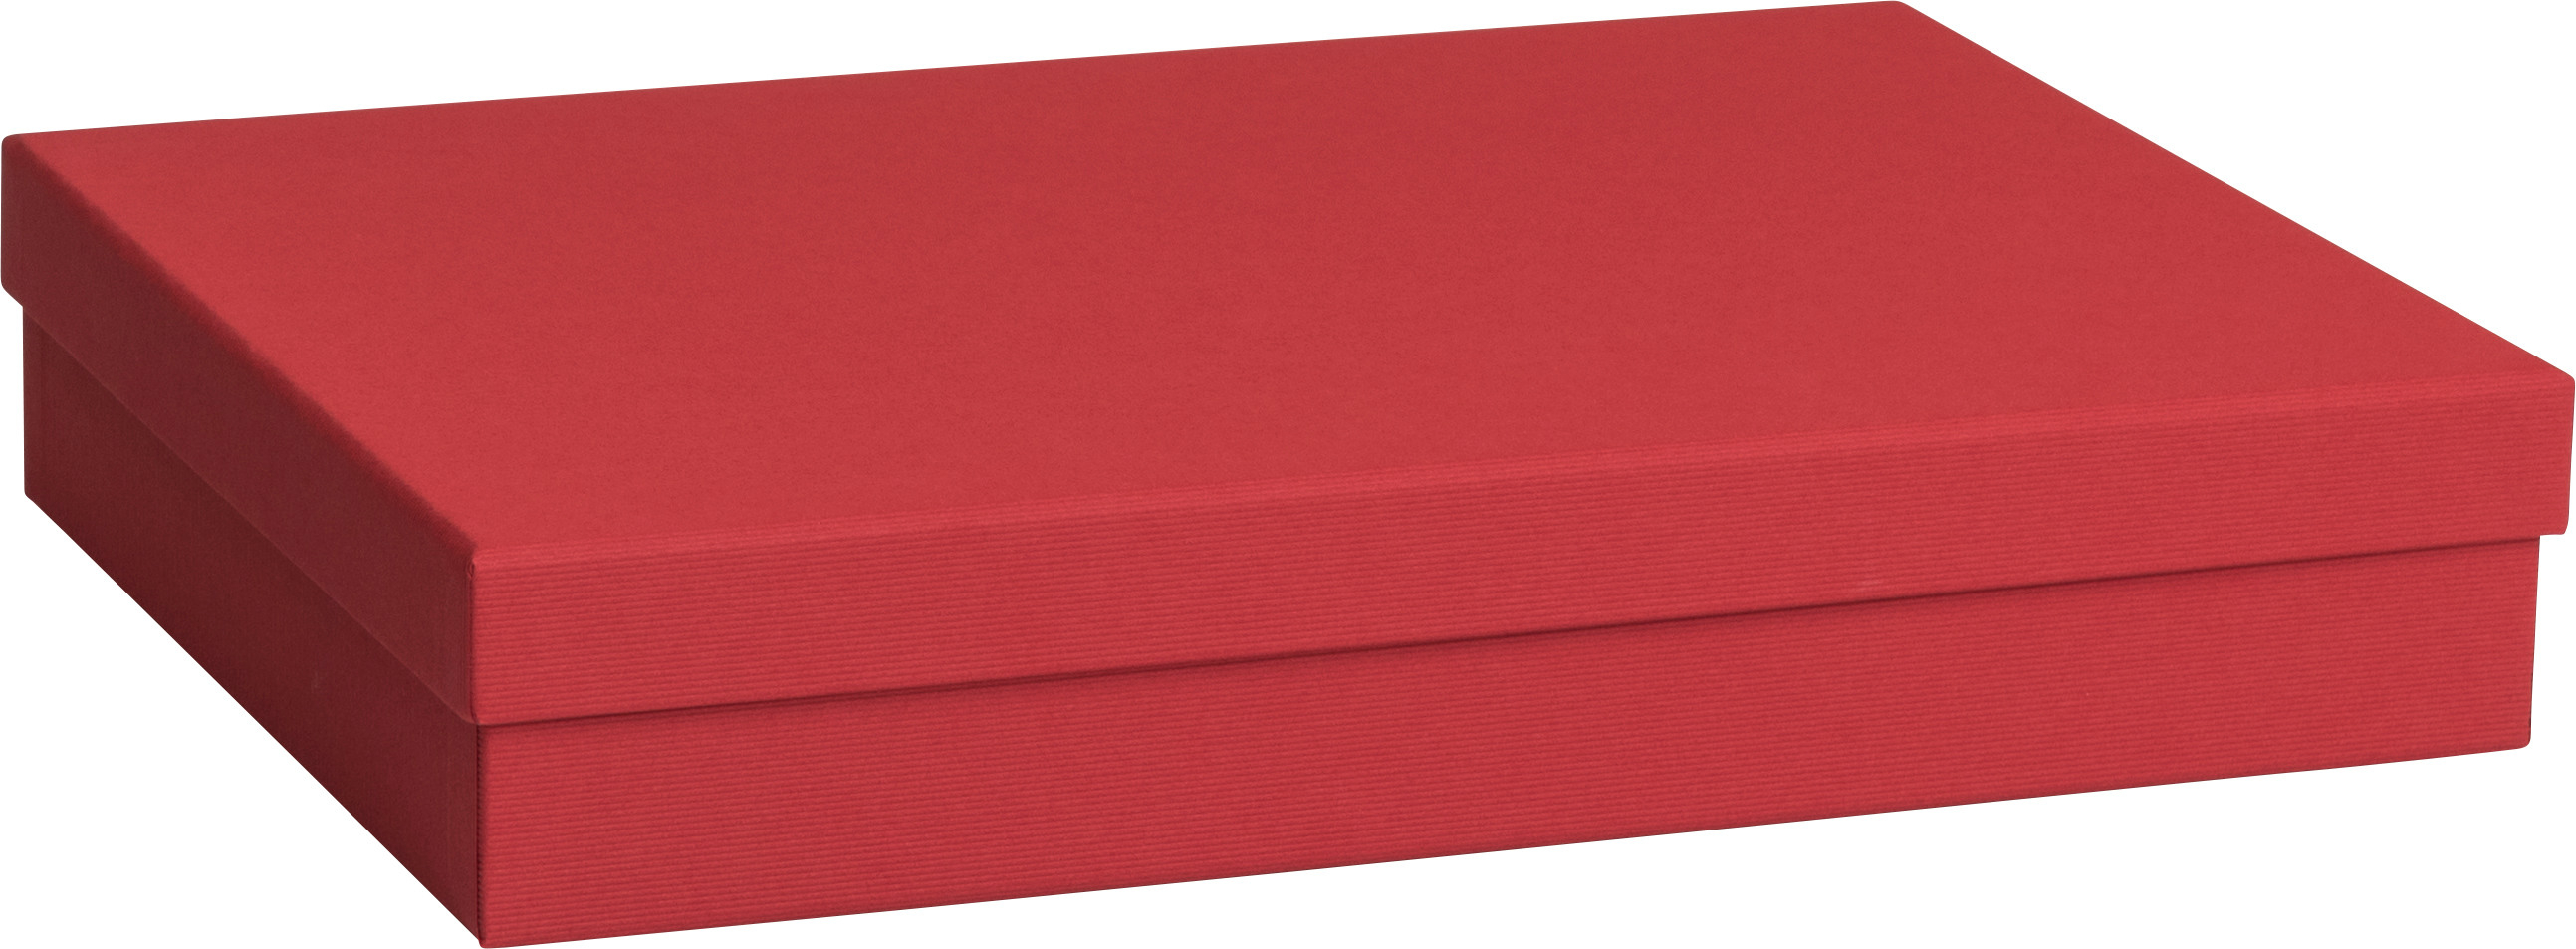 STEWO Geschenkbox One Colour 2551784293 rot dunkel 24x33x6cm